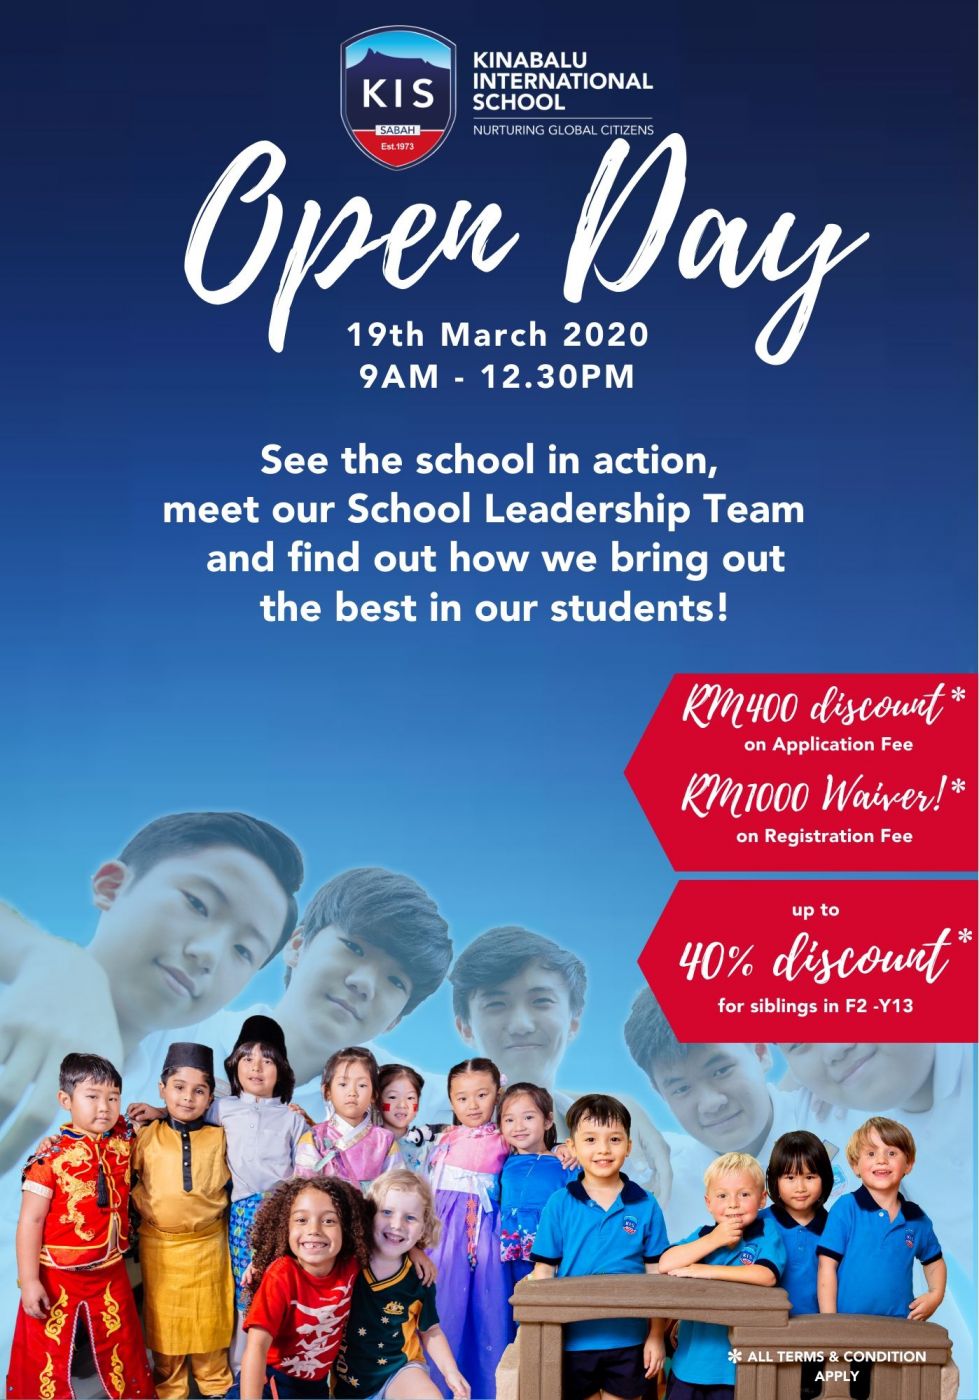 Kinabalu International School Open Day 19th March 2020 and International School in Sabah, Malaysia